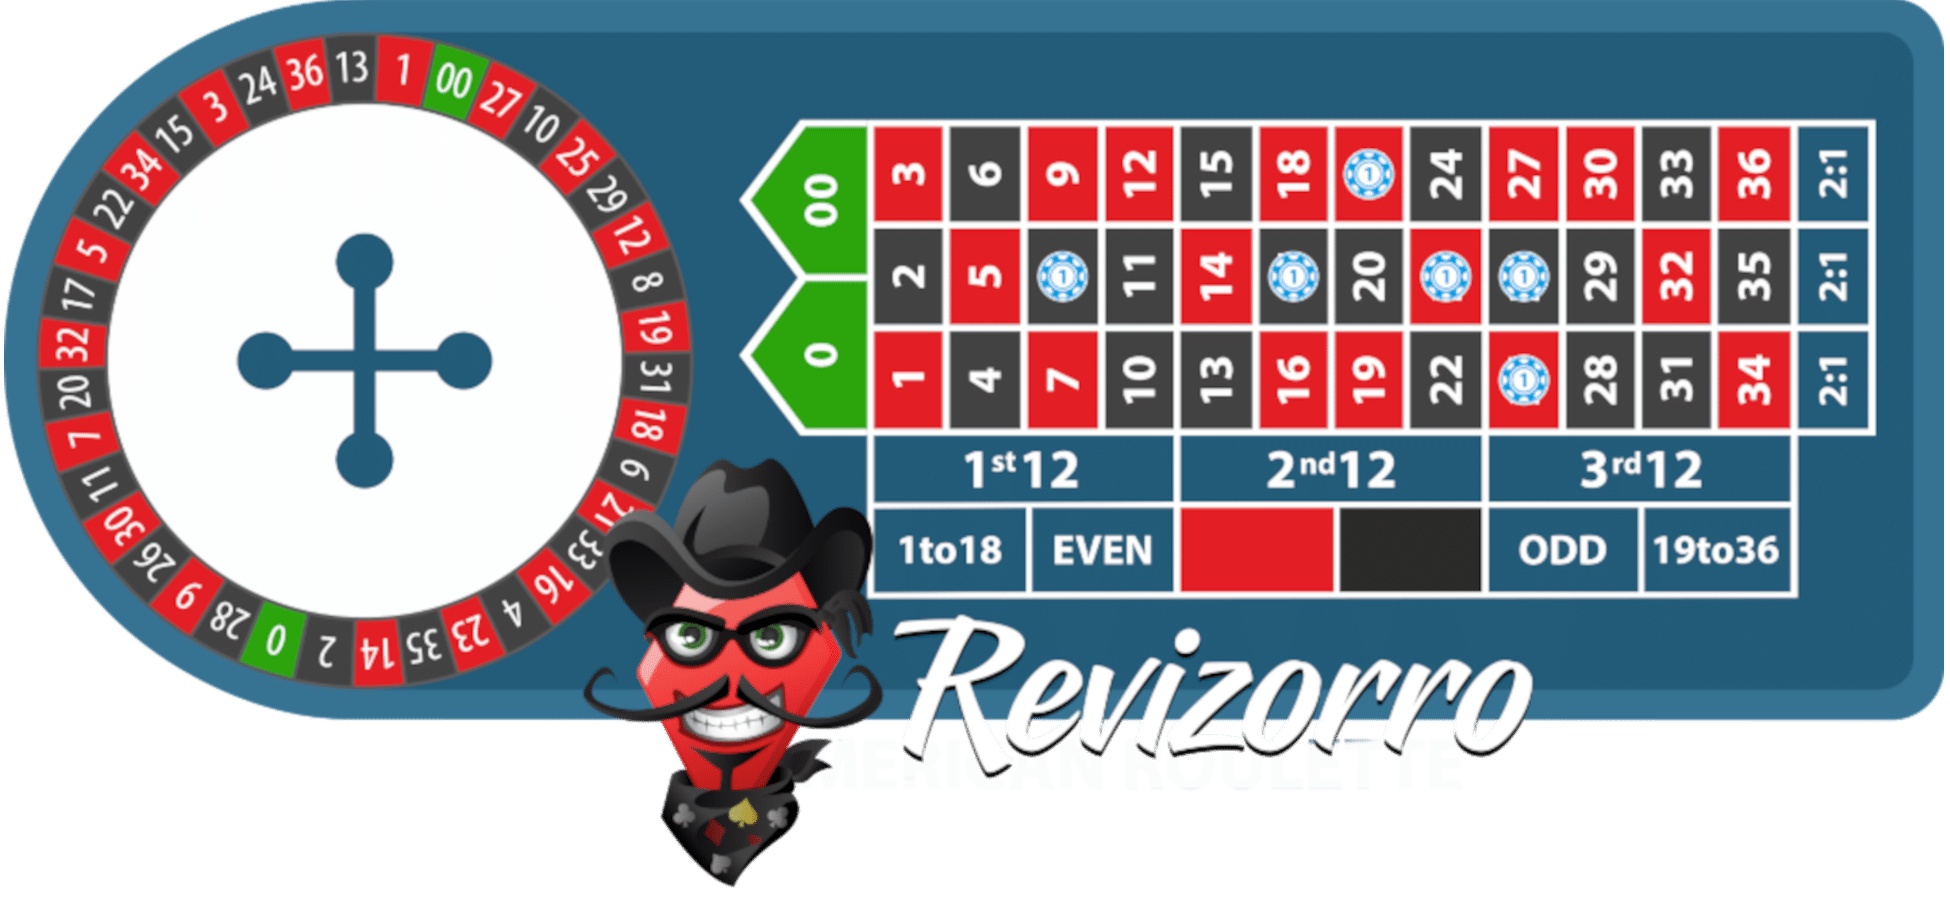 american-roulette revizorro casinos